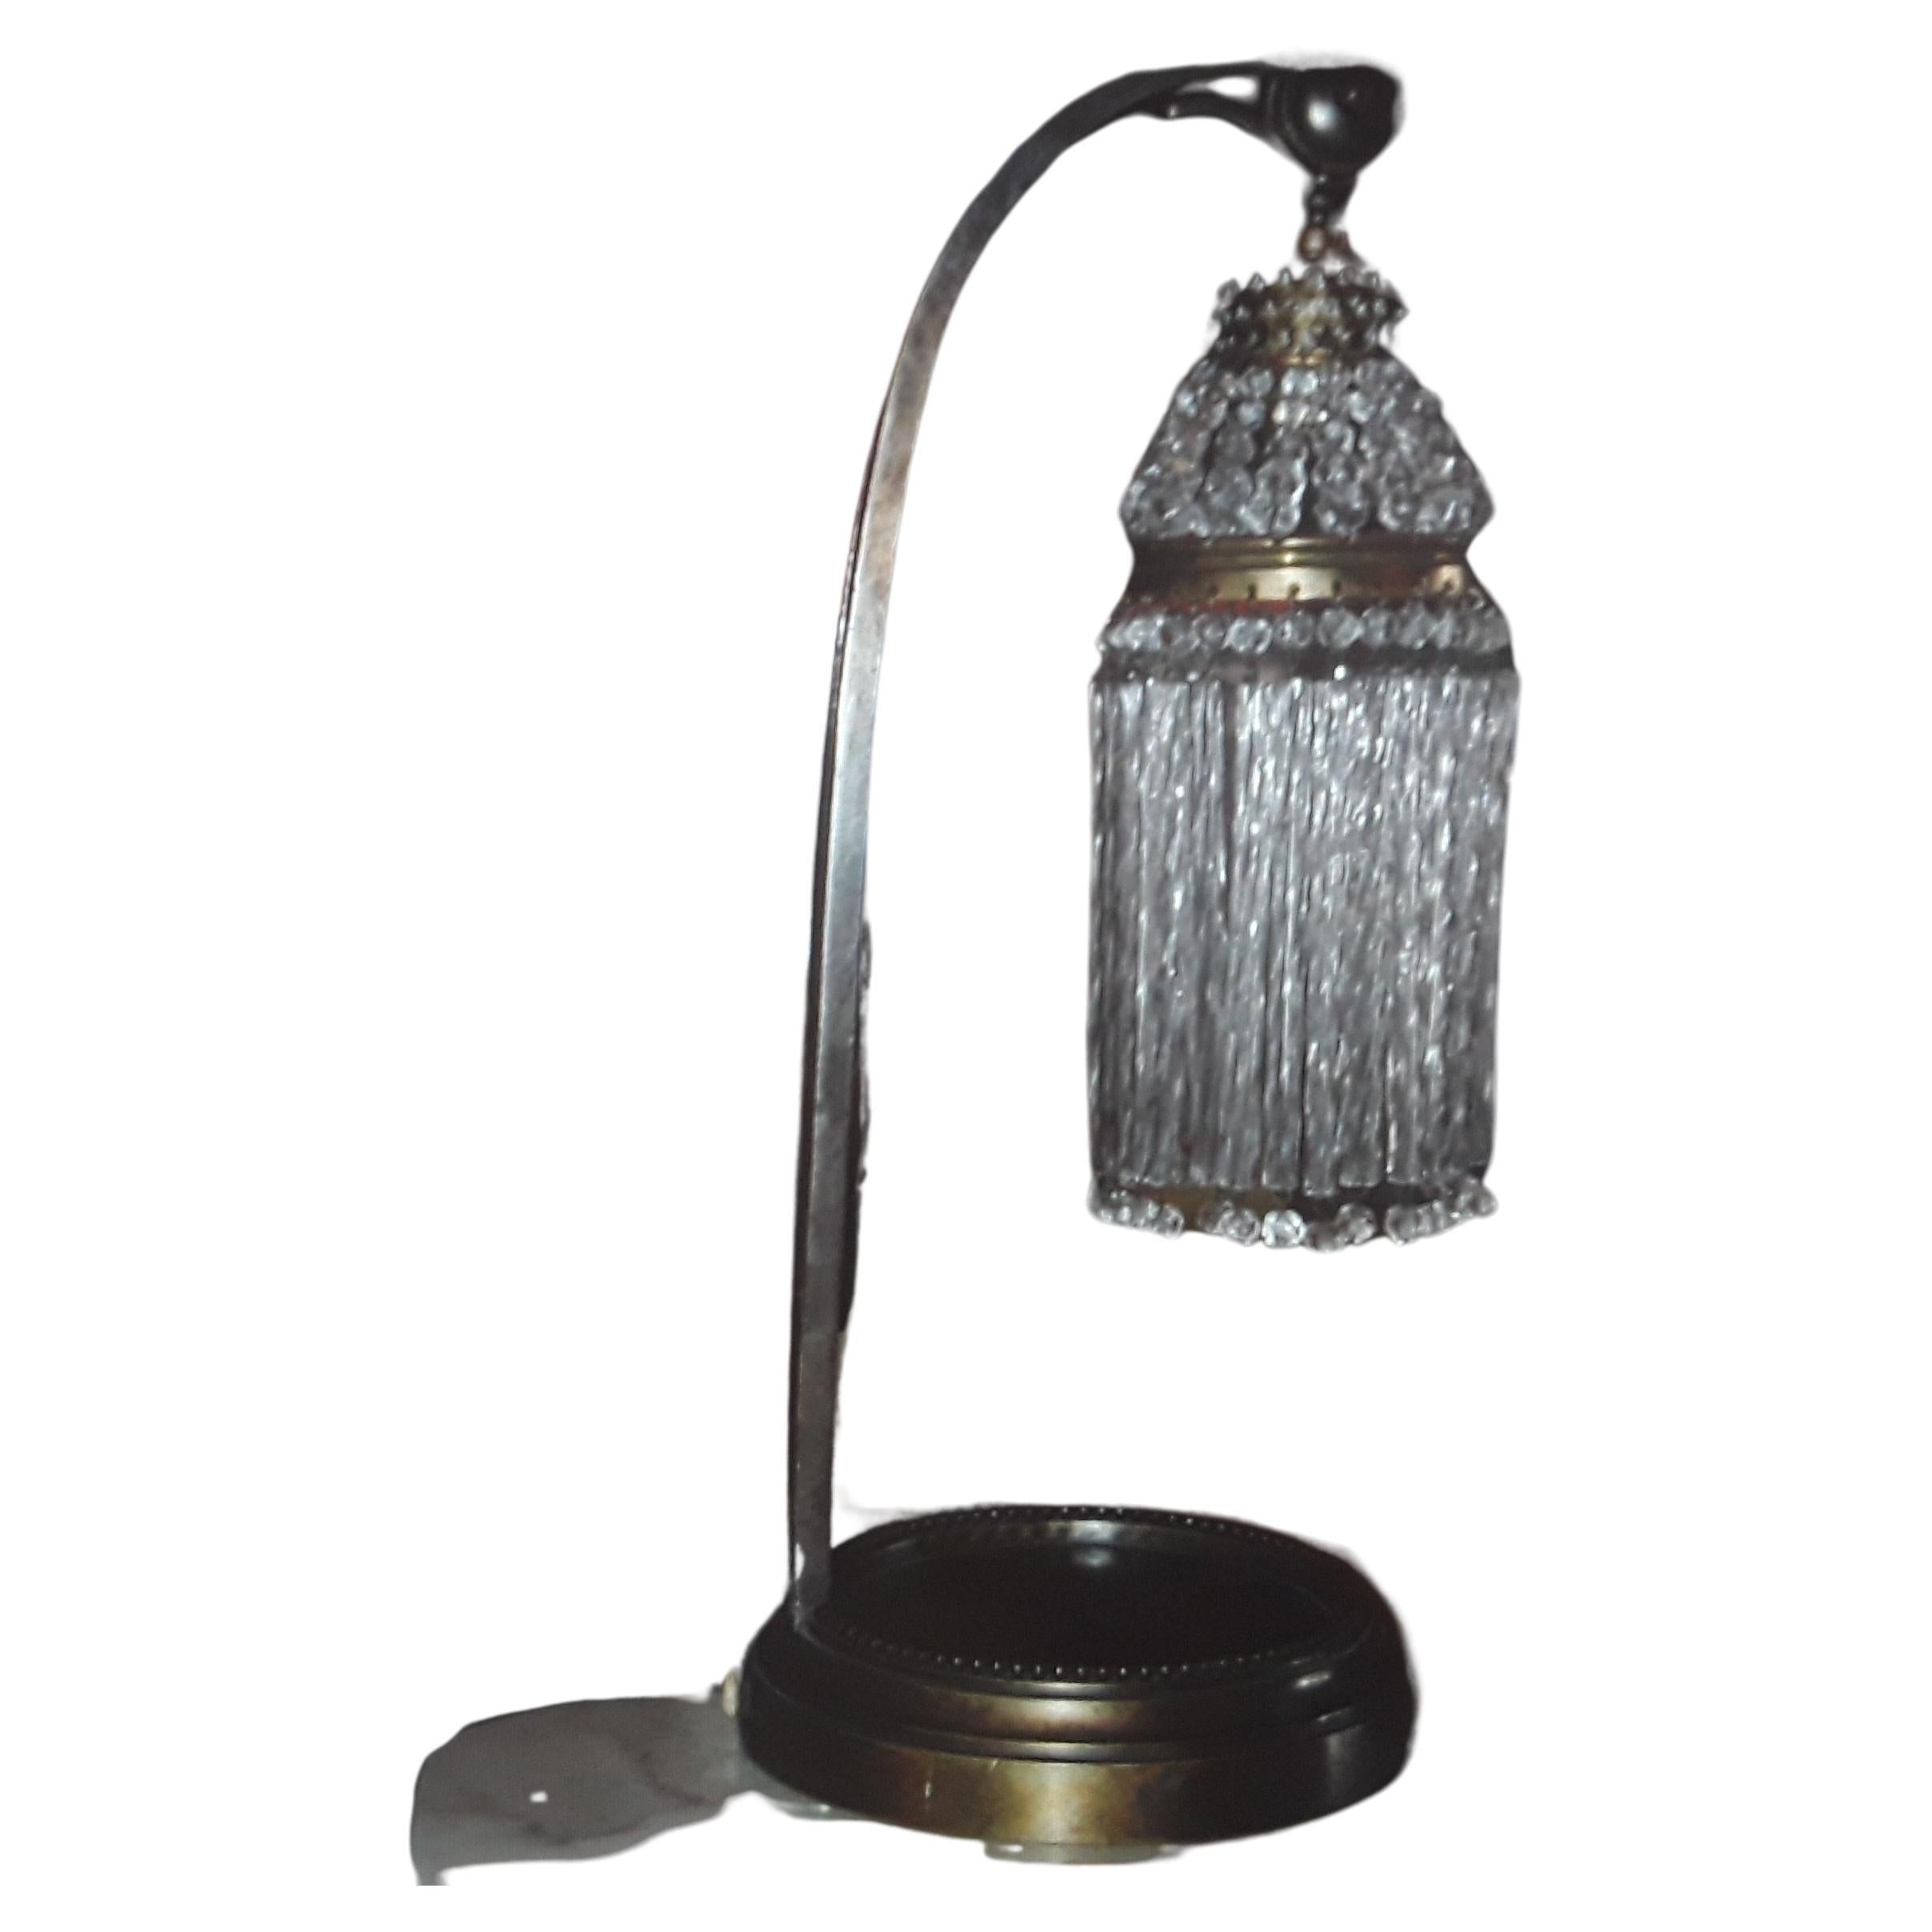 Pr 1920 French Art Deco Bronze Based Desk Lamp w/ Cut Crystal Adjustable Shade.